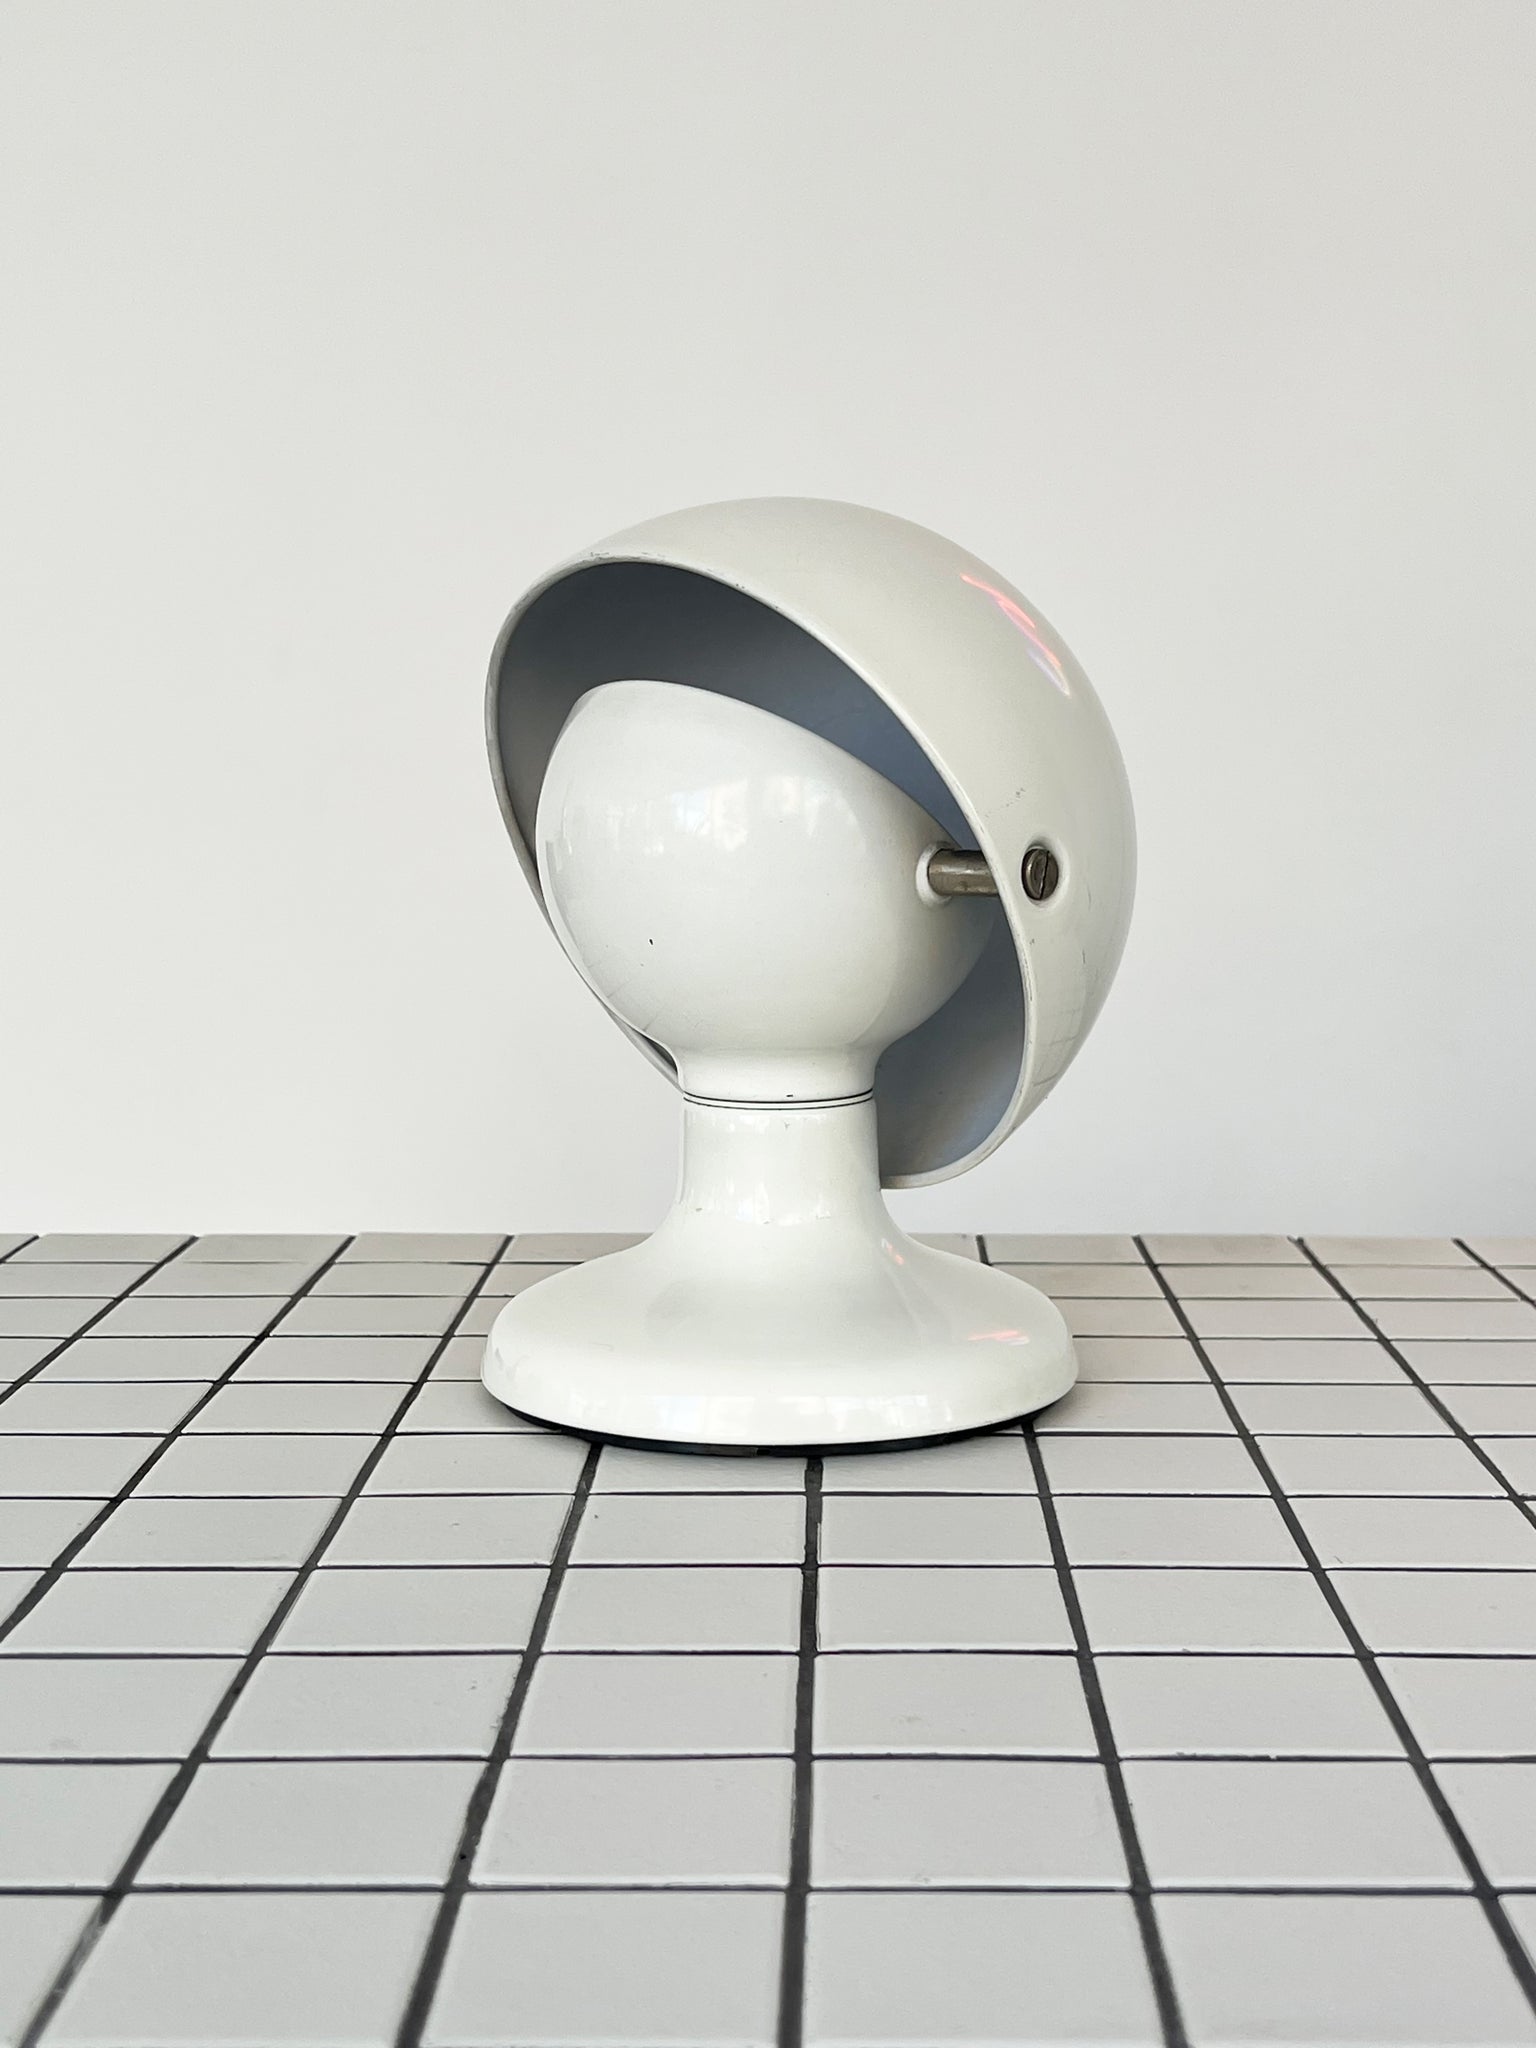 1963 White Enameled Jucker Lamp by Tobia Scarpa